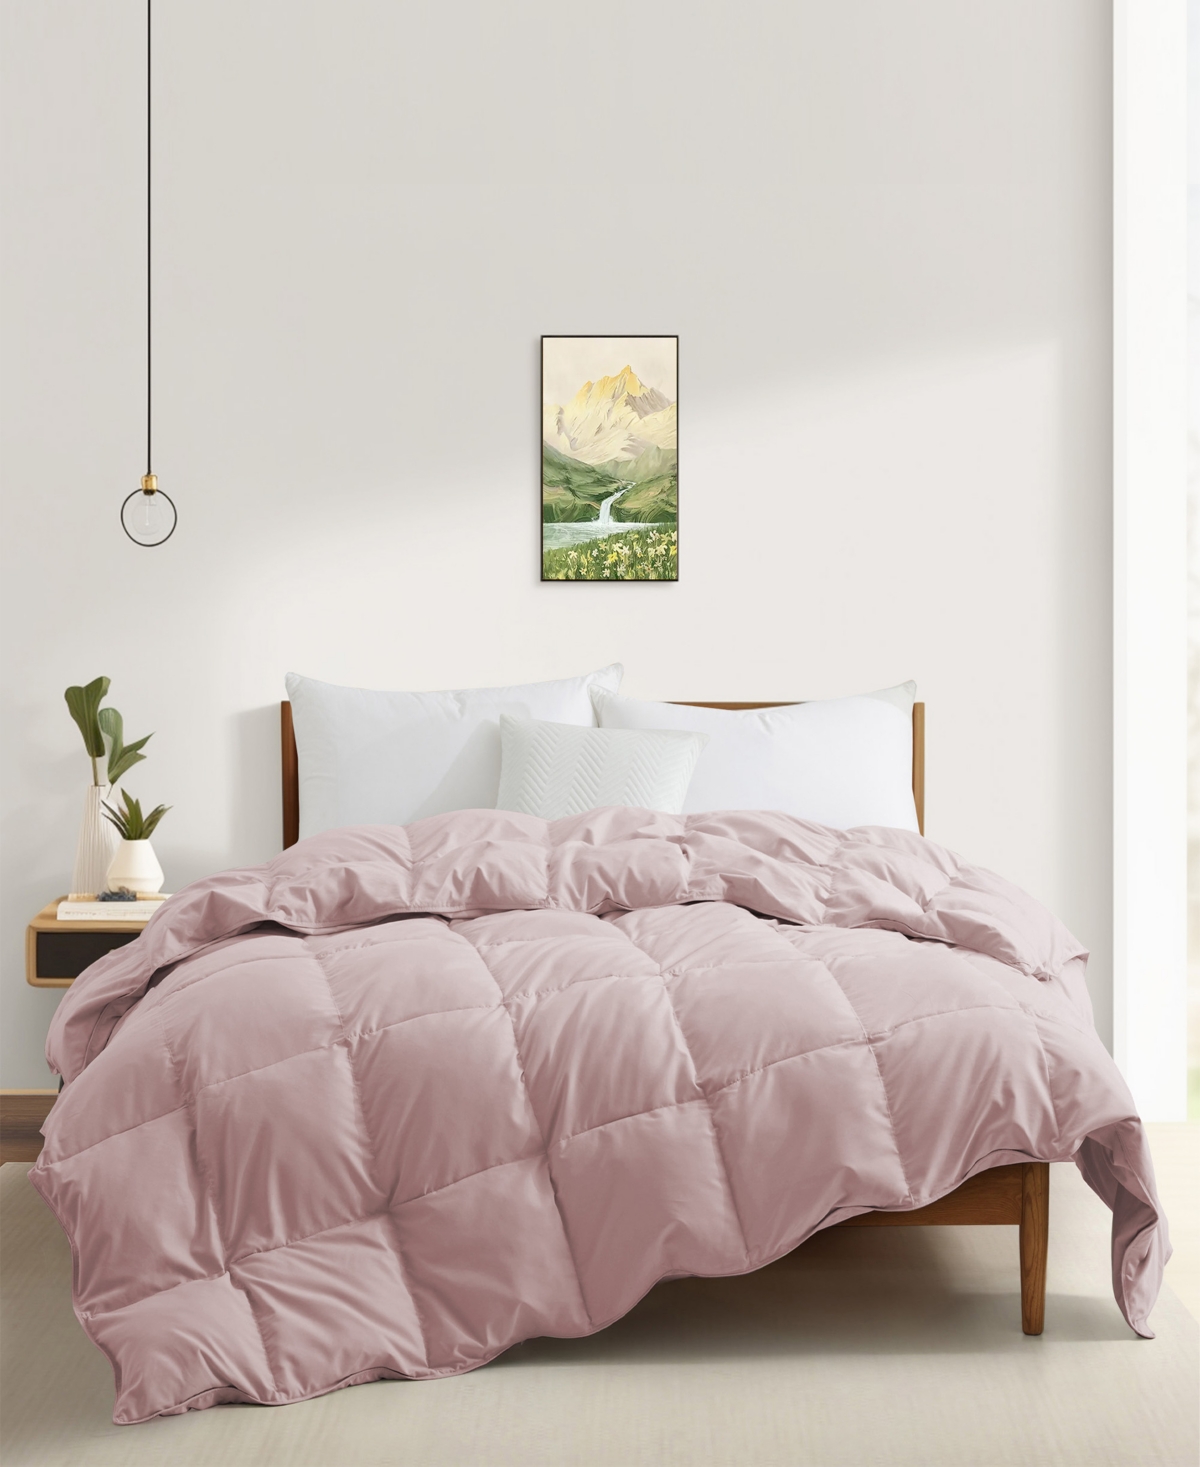 Unikome Lightweight White Goose Down Feather Fiber Comforter, Full/queen In Pink